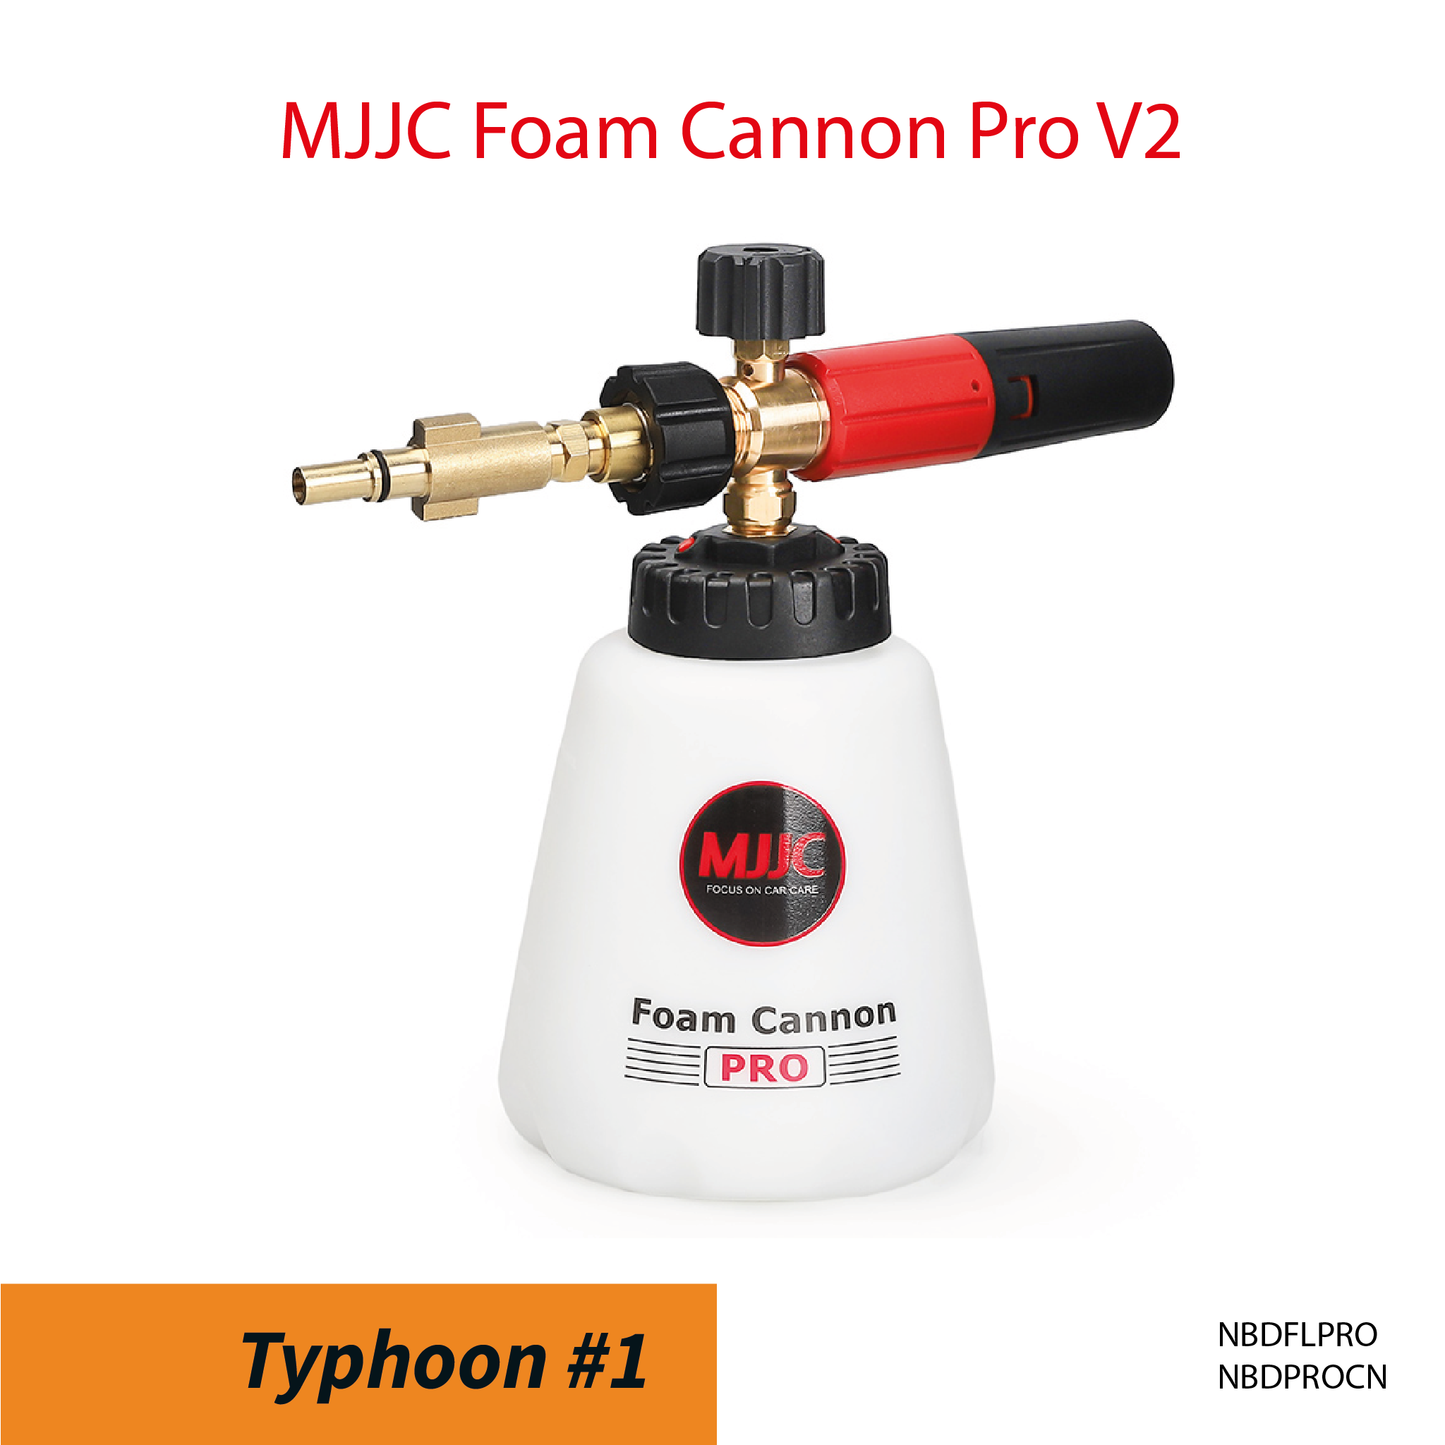 Typhoon presure washer - MJJC Foam Cannon Pro V2 (Pressure Washer Snow Foam Lance Gun)